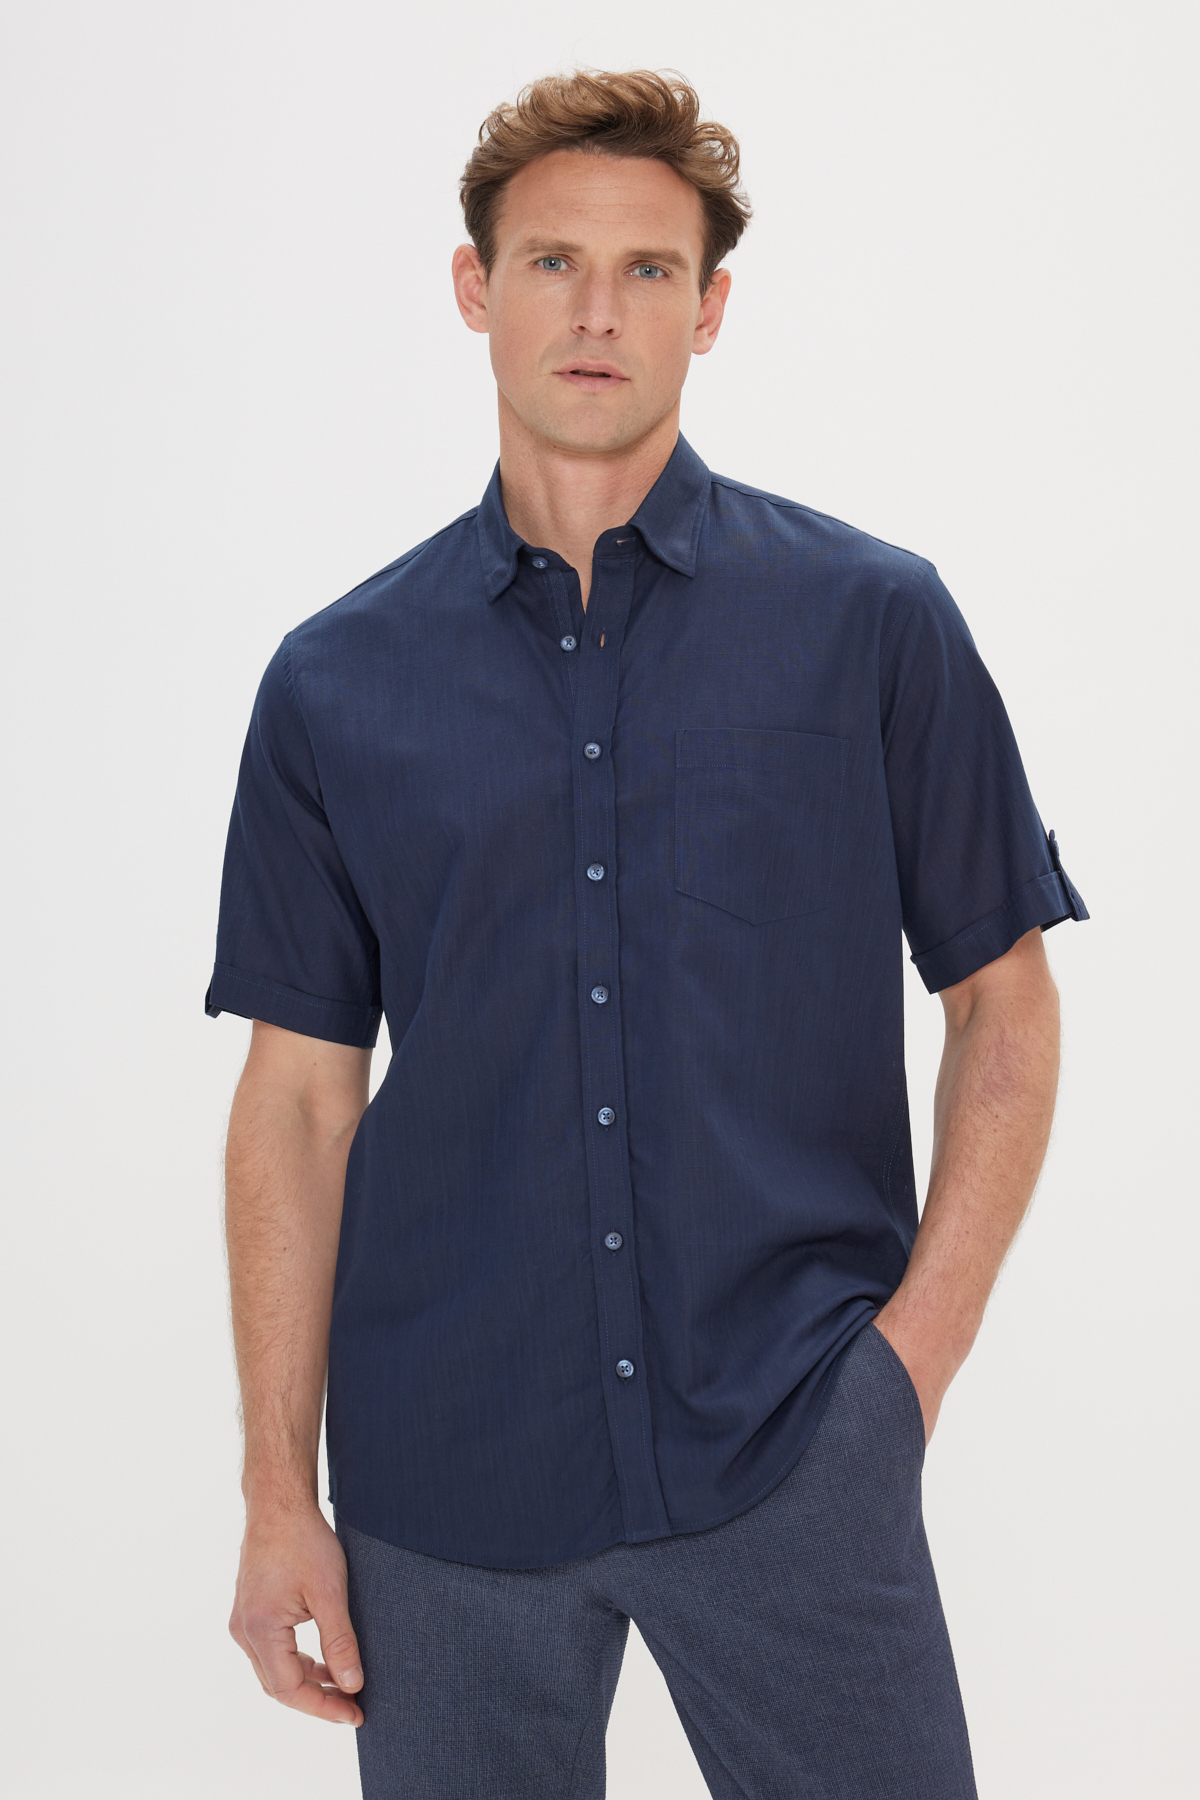 AC&Co / Altınyıldız Classics Men's Navy Blue Comfort Fit Comfy Cut Buttoned Collar Linen-Looking 100% Cotton Short Sleeve Shirt.